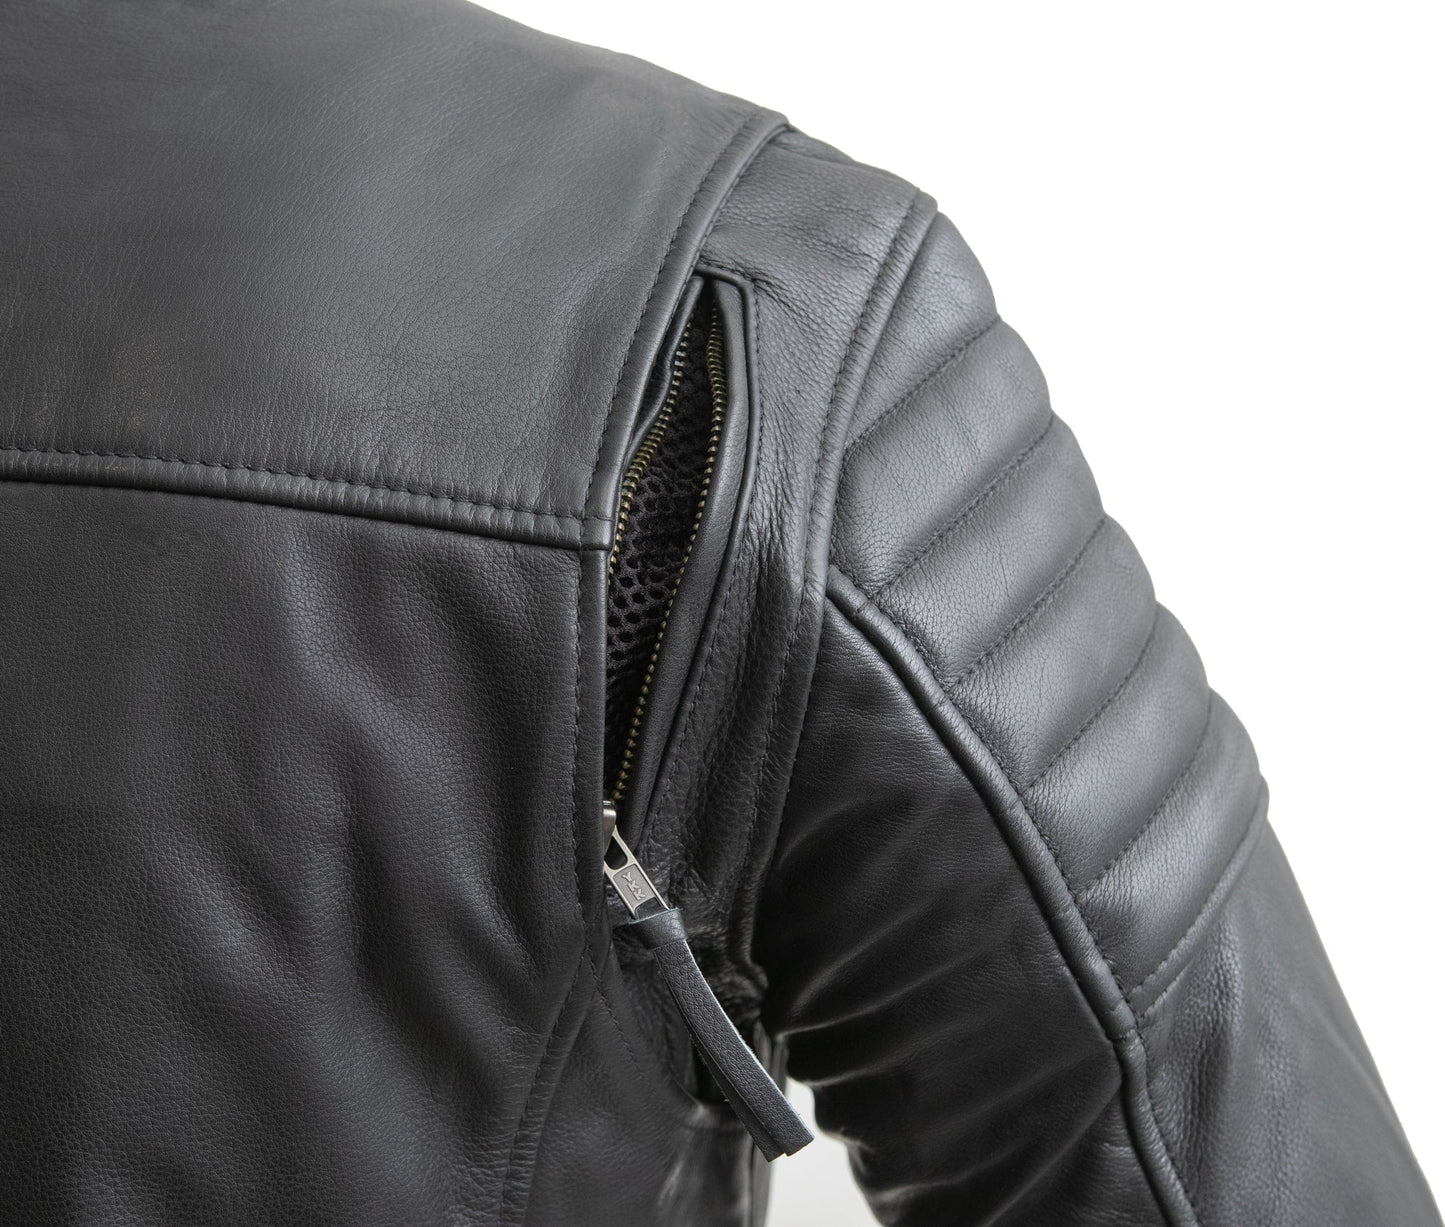 Commuter Men's Motorcycle Leather Jacket - Black